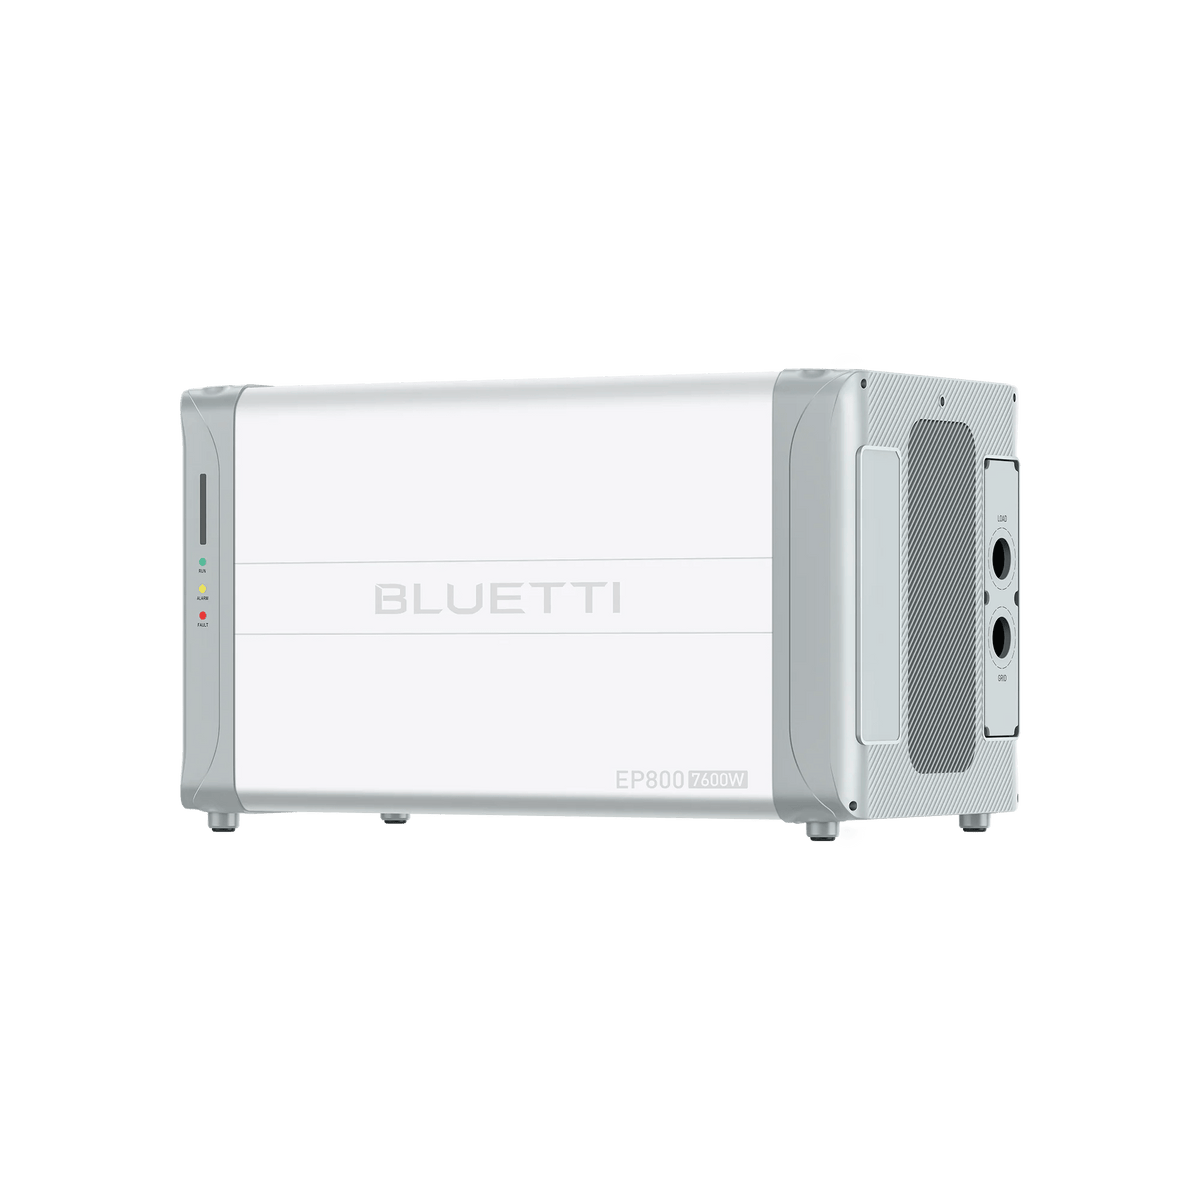 Bluetti Home Integration Kit Bluetti EP800+B500 Home Battery Backup